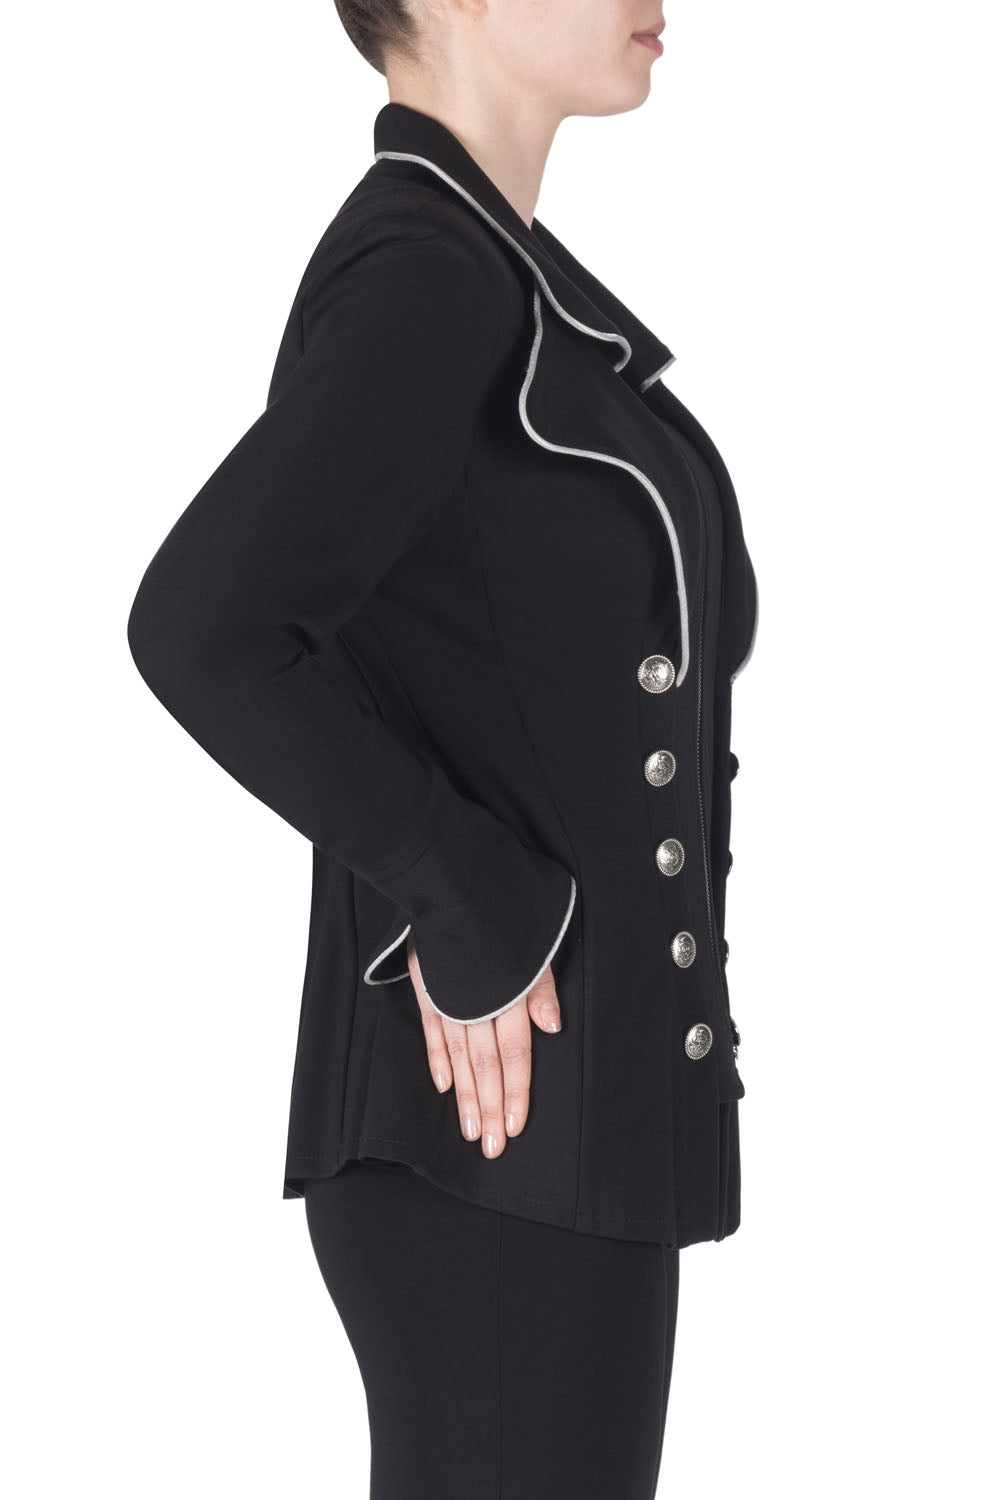 Joseph Ribkoff Black-Light Grey Jacket Style 183355